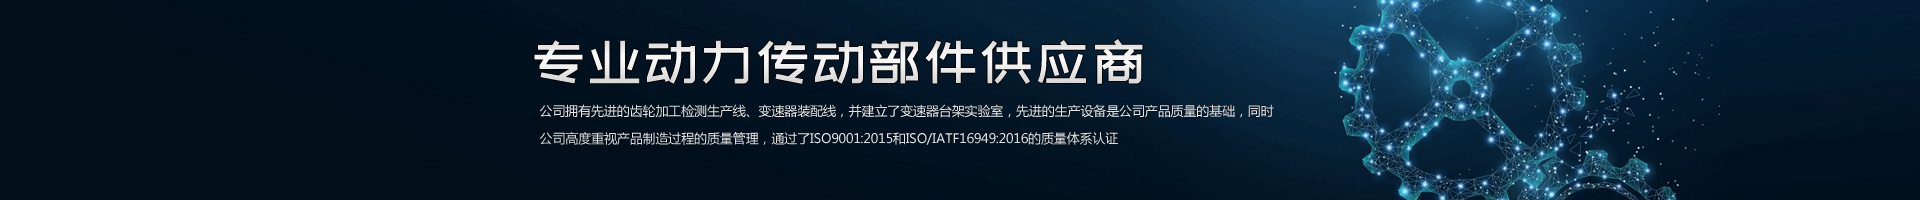 bat365·(中文)官方网站-在线登录入口